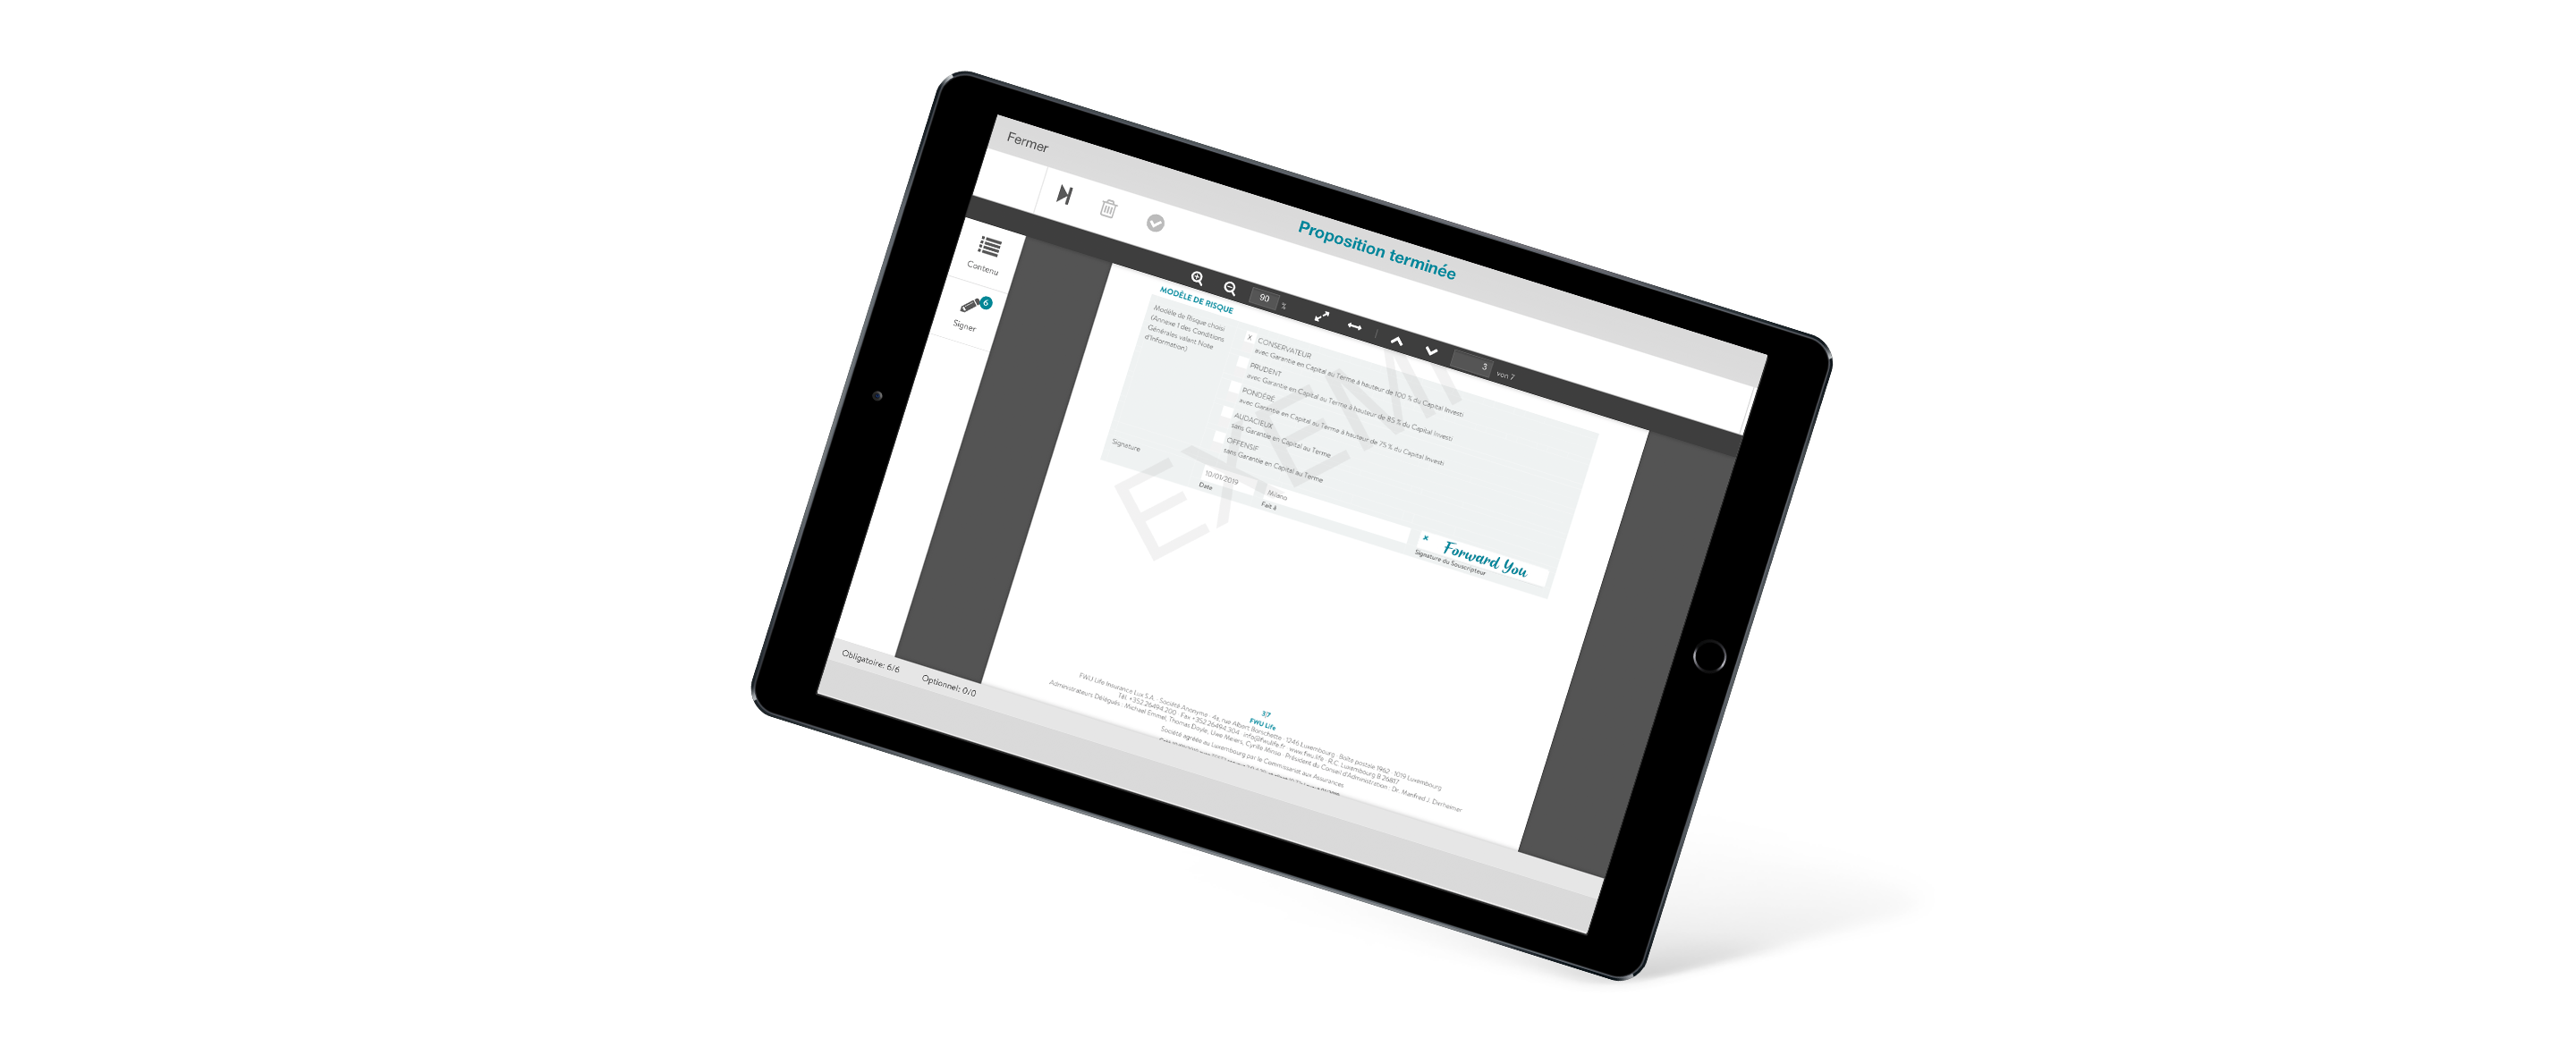 Filos iPad Application Finalized - ipad filos desktop english1